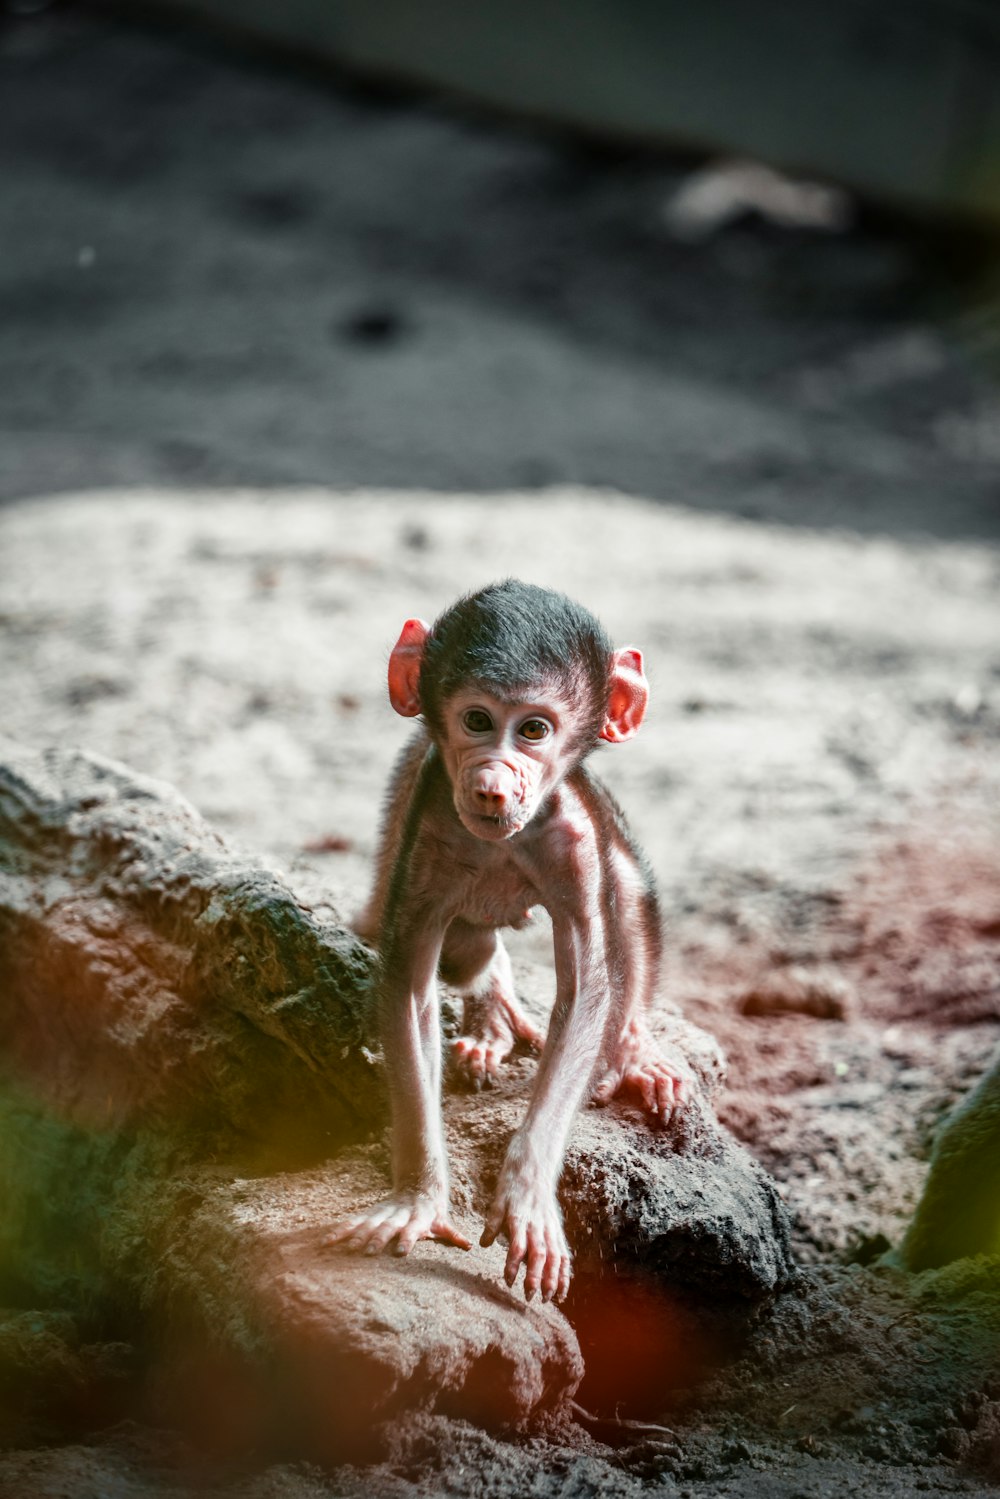 a baby monkey in water